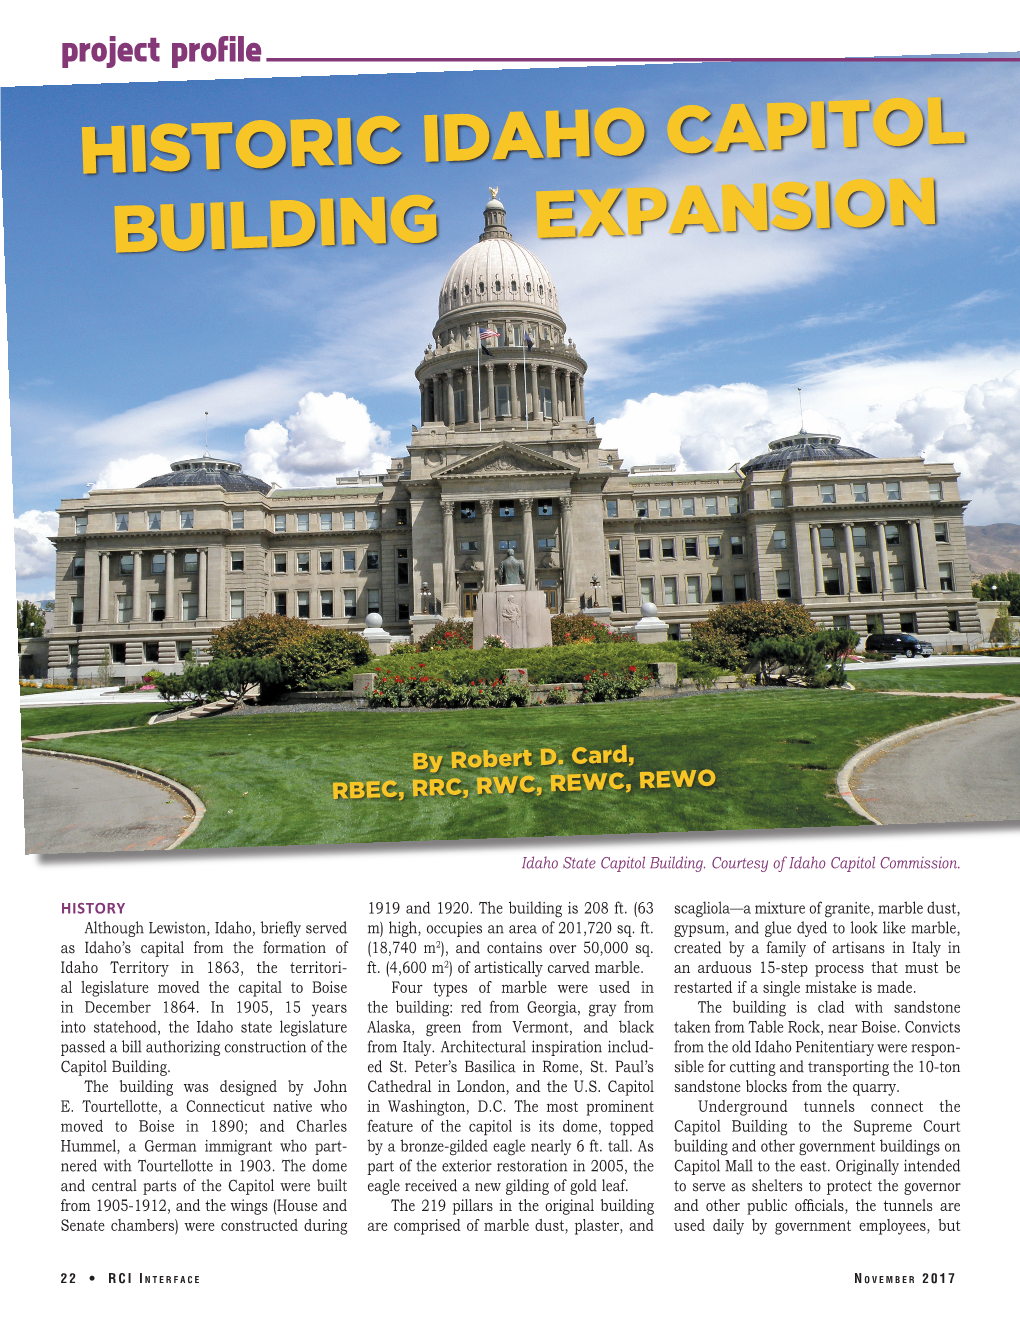 Historic Idaho Capitol Building Expansion